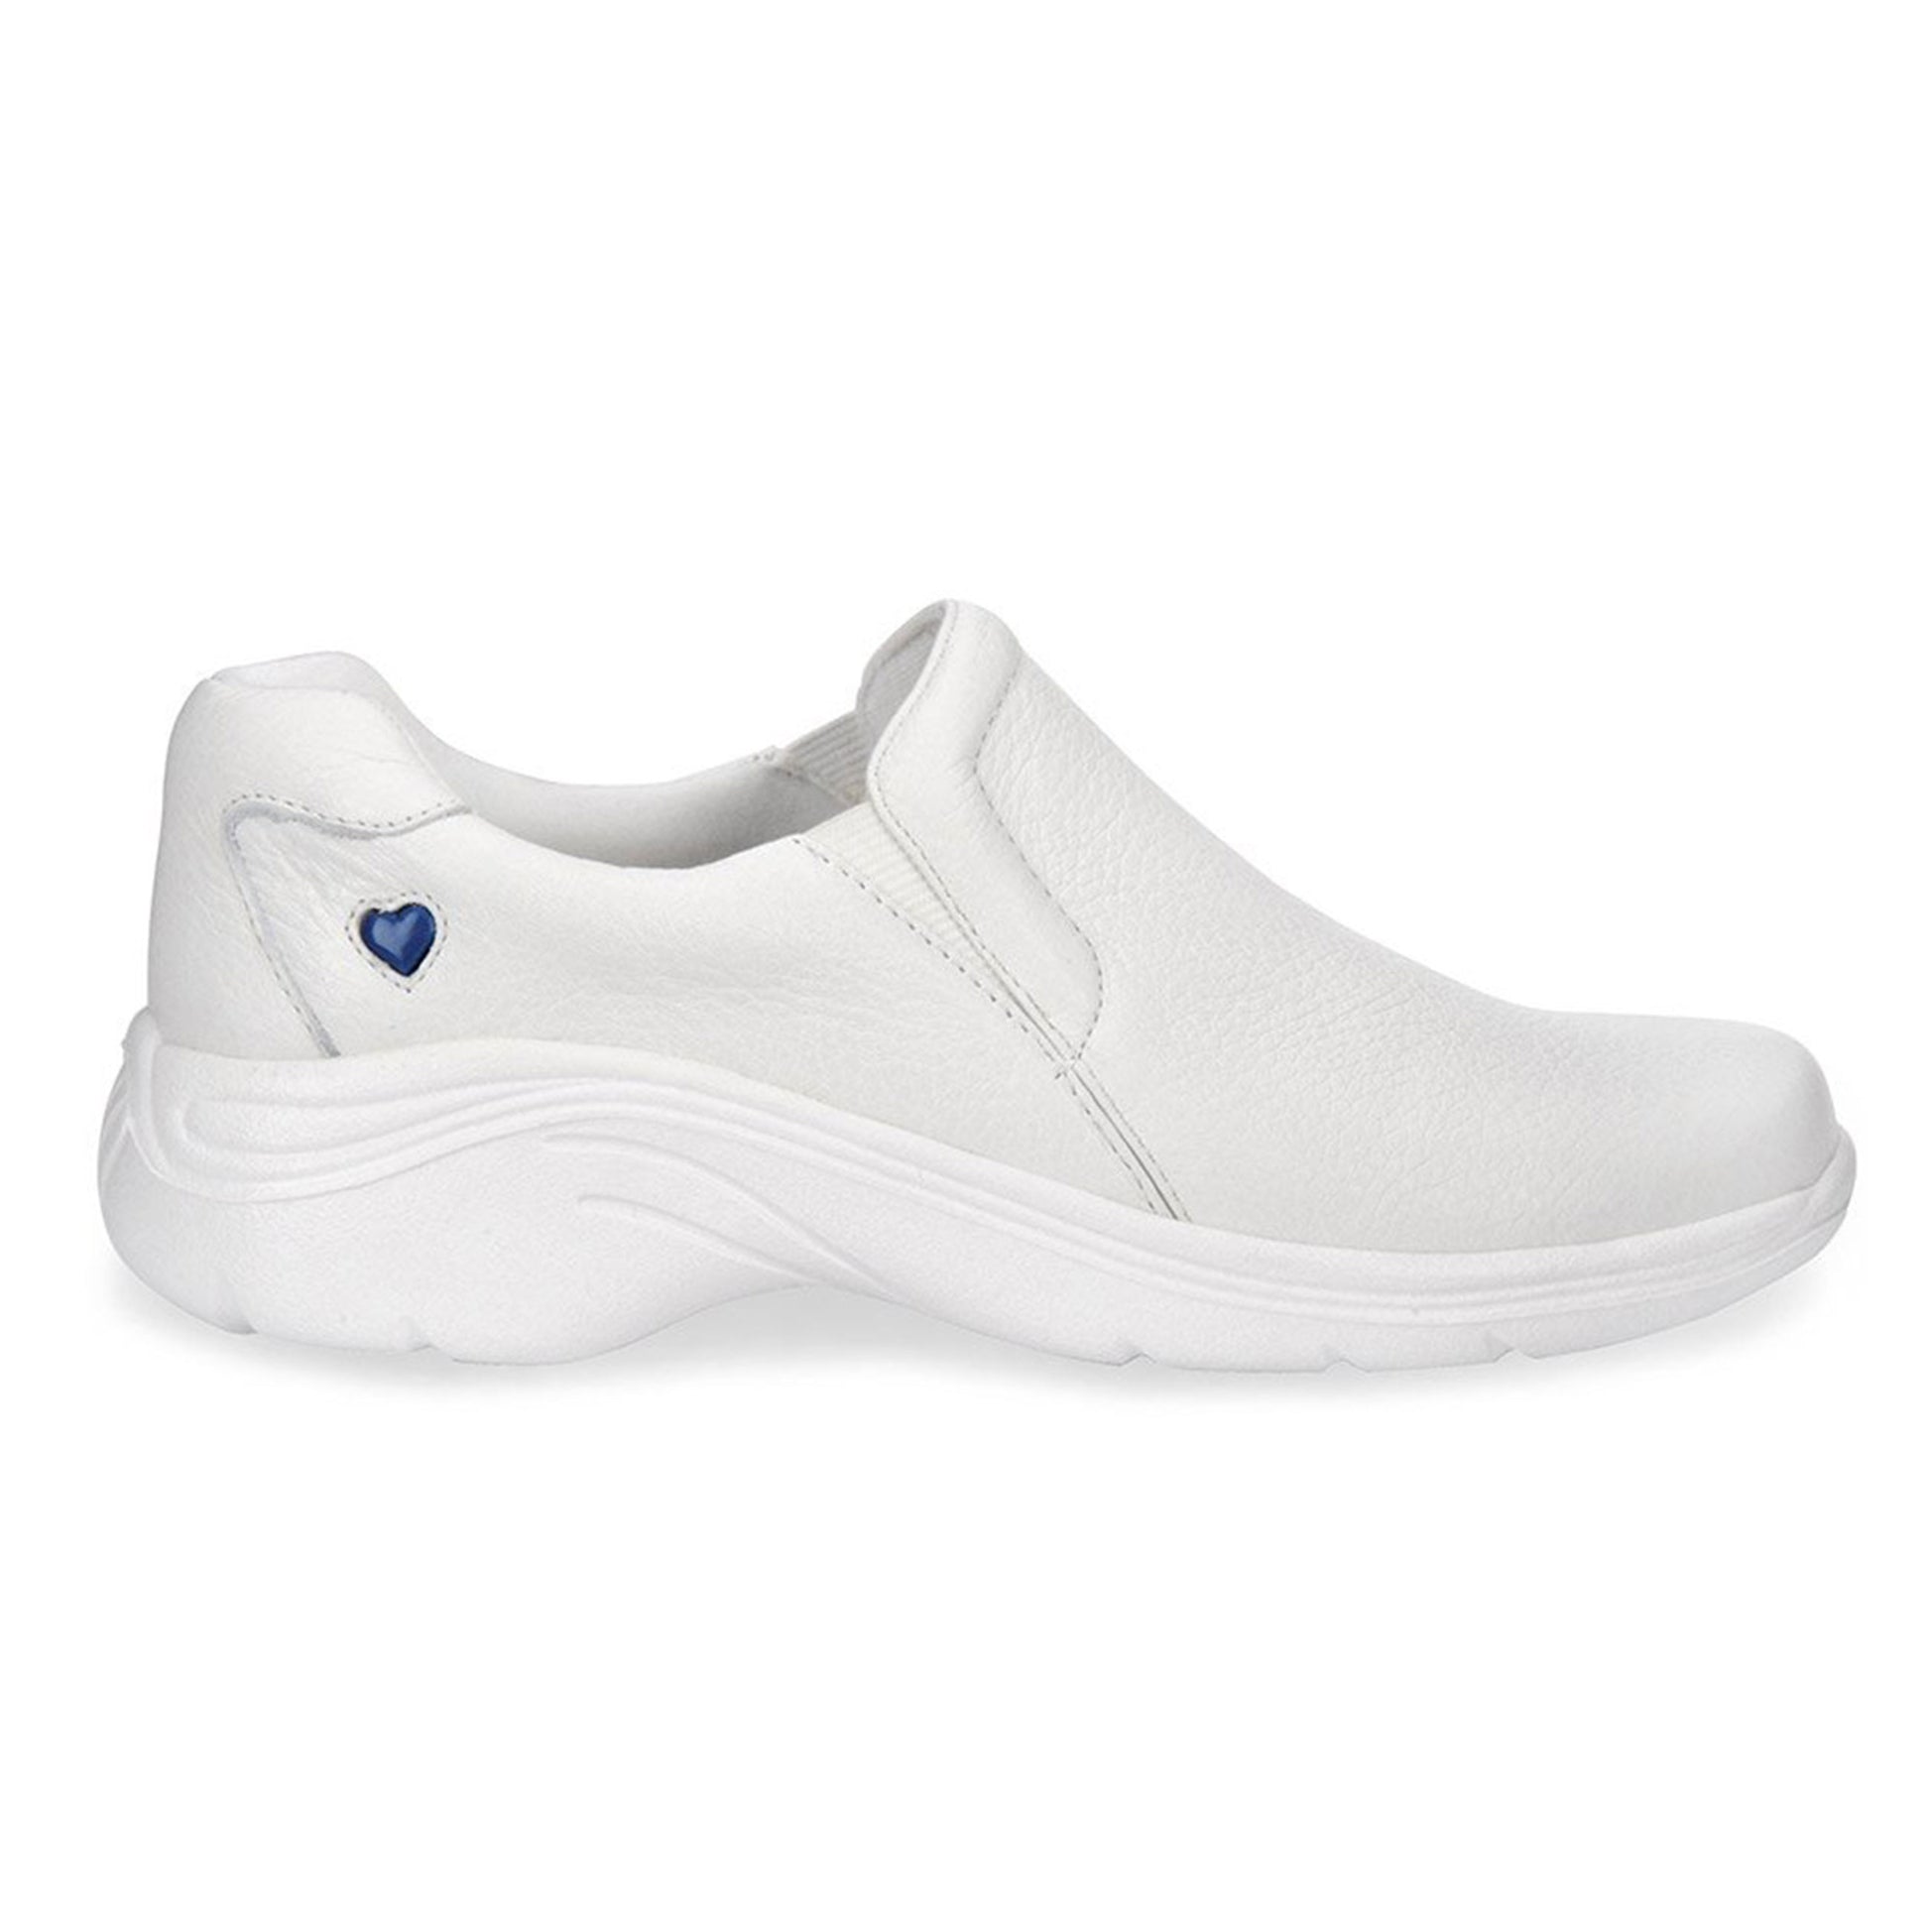 Nursemates Dove White Shoes